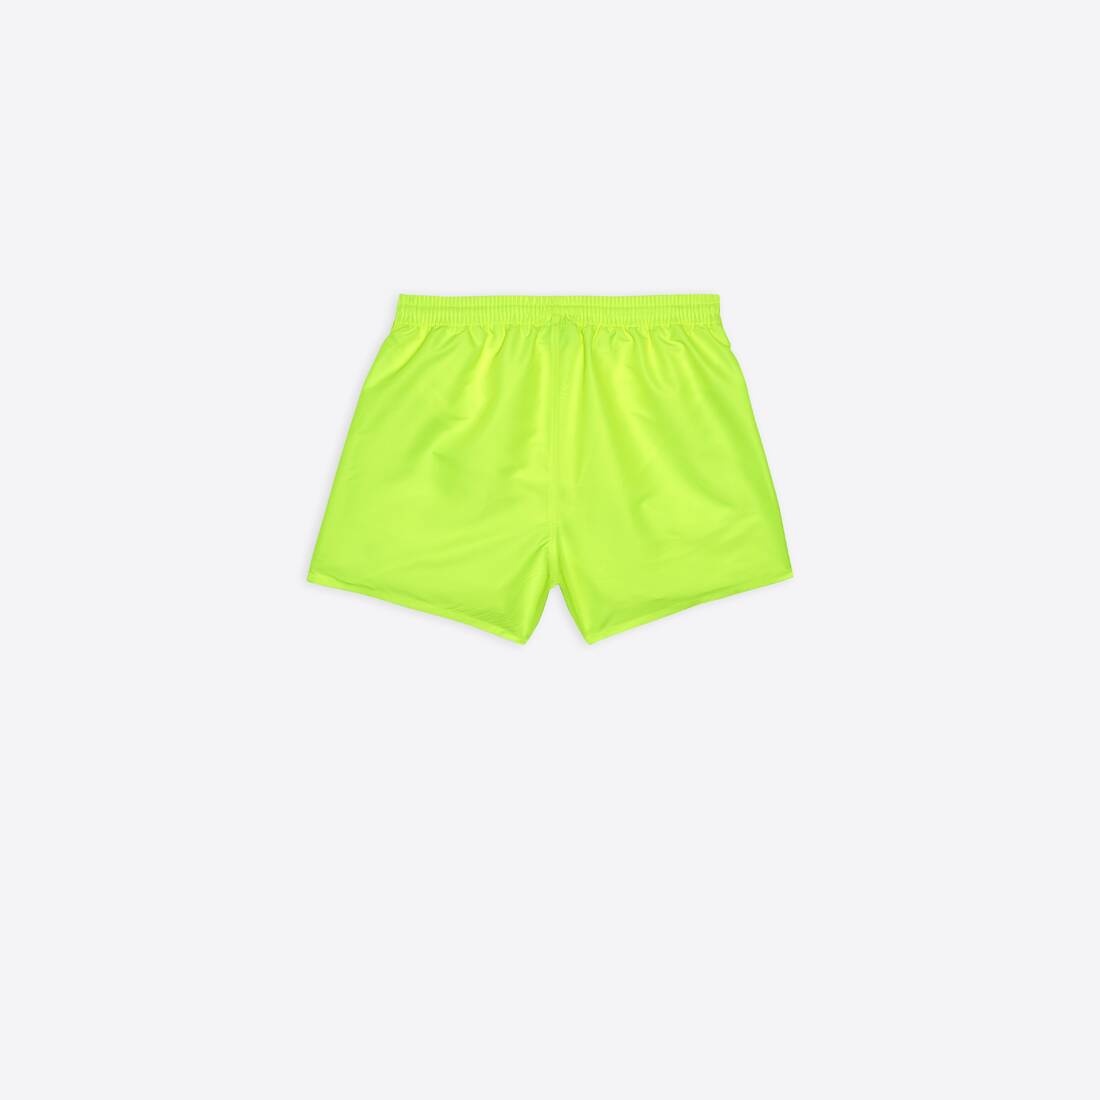 Men's Swim Shorts in Yellow - 2